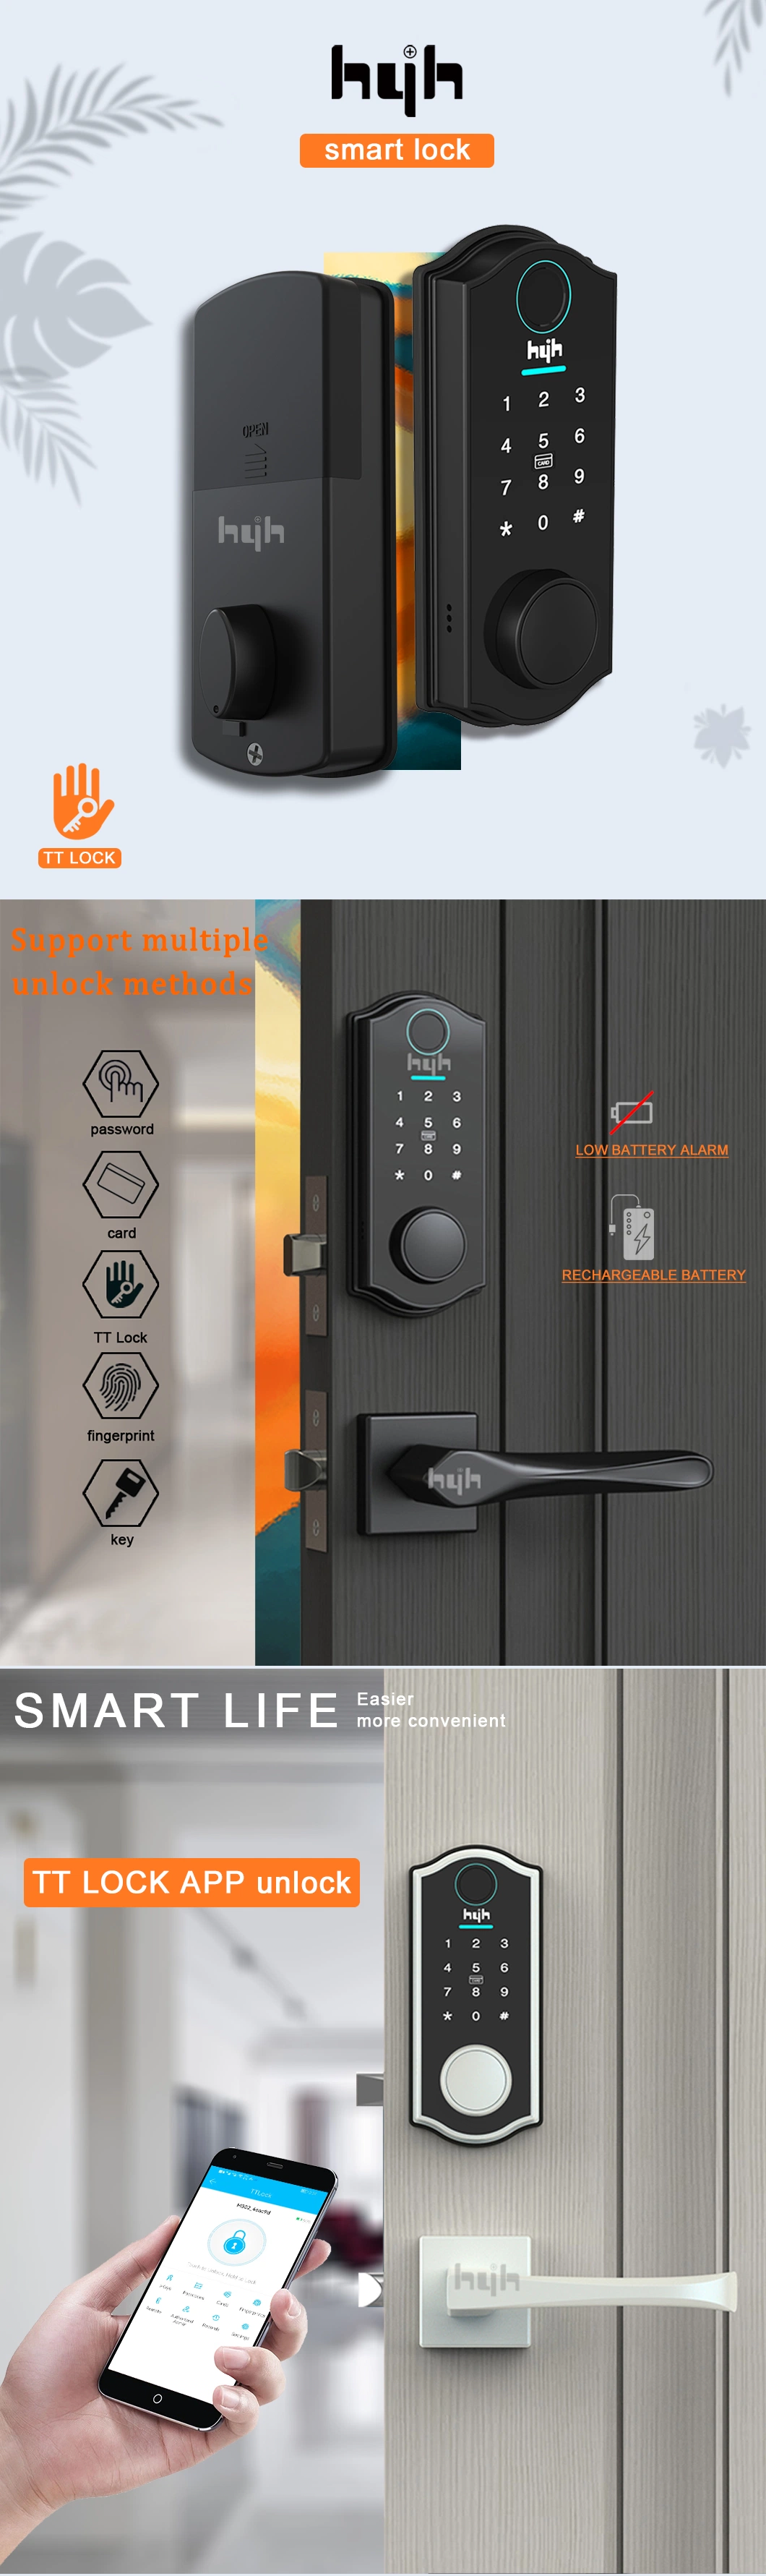 Blue-Tooth Biometric Fingerprint Room Digital Cord Keyboard Passcode Deadbolt Lock Door with Ttlock APP